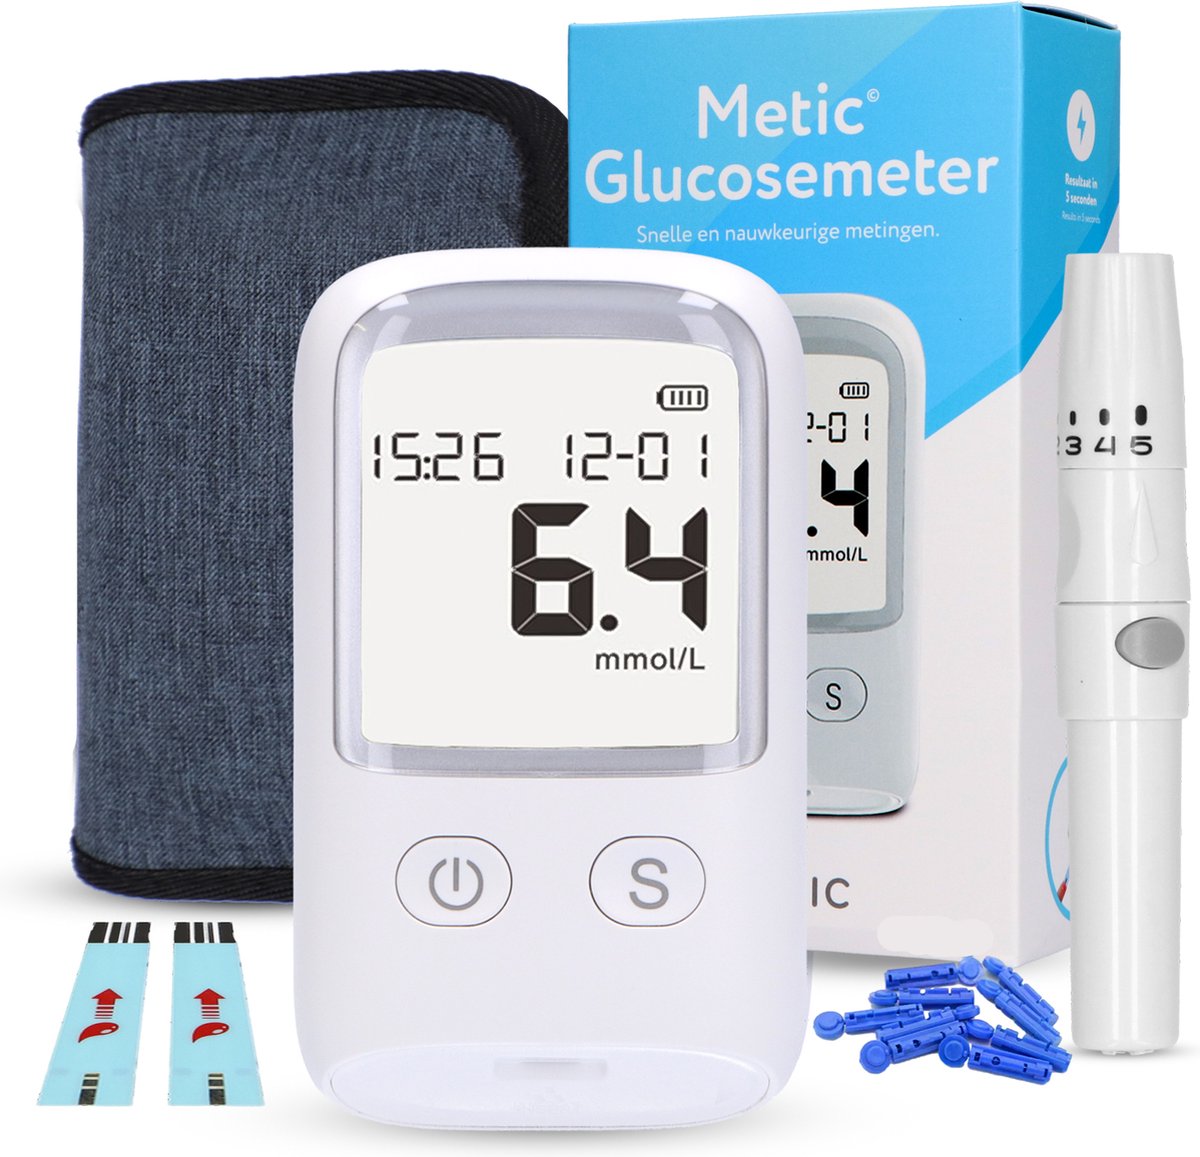 Metic Glucosemeter Pro - Startpakket review